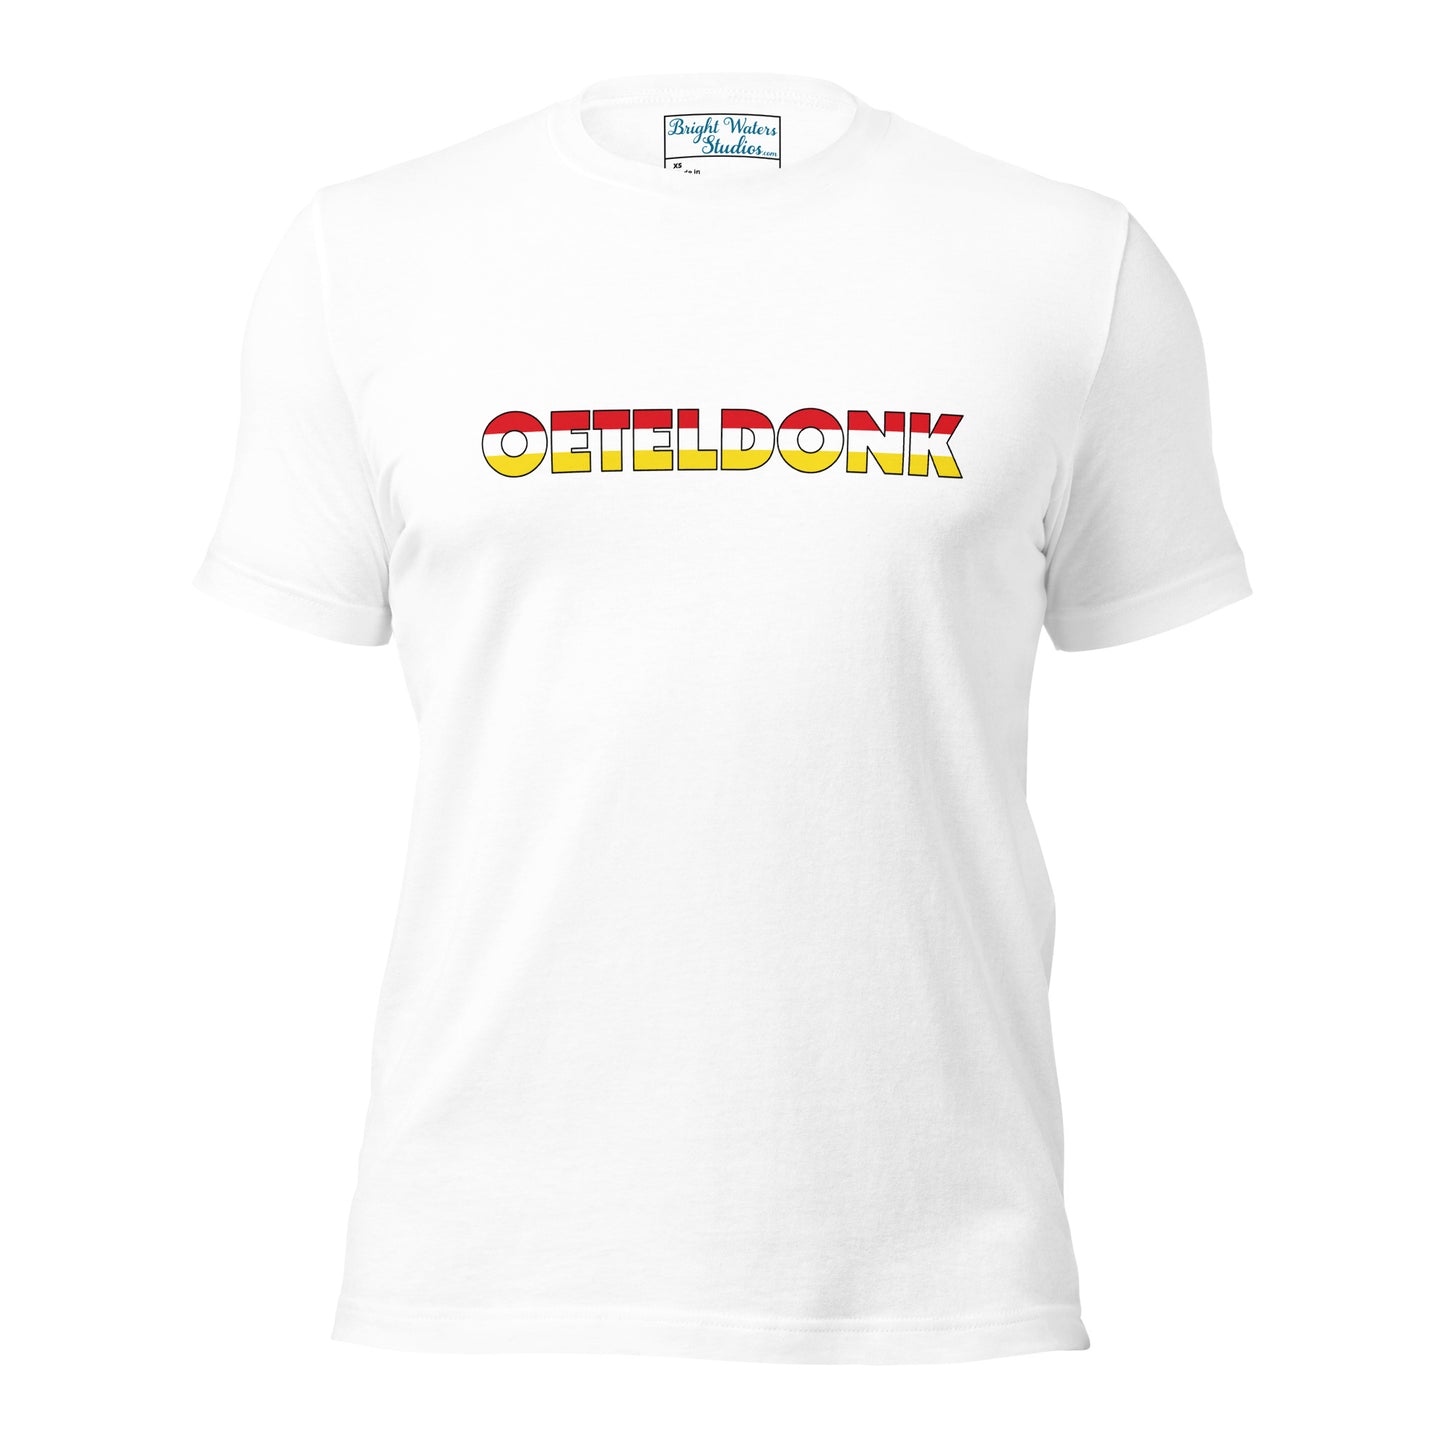 Oeteldonk Uniseks T-shirt